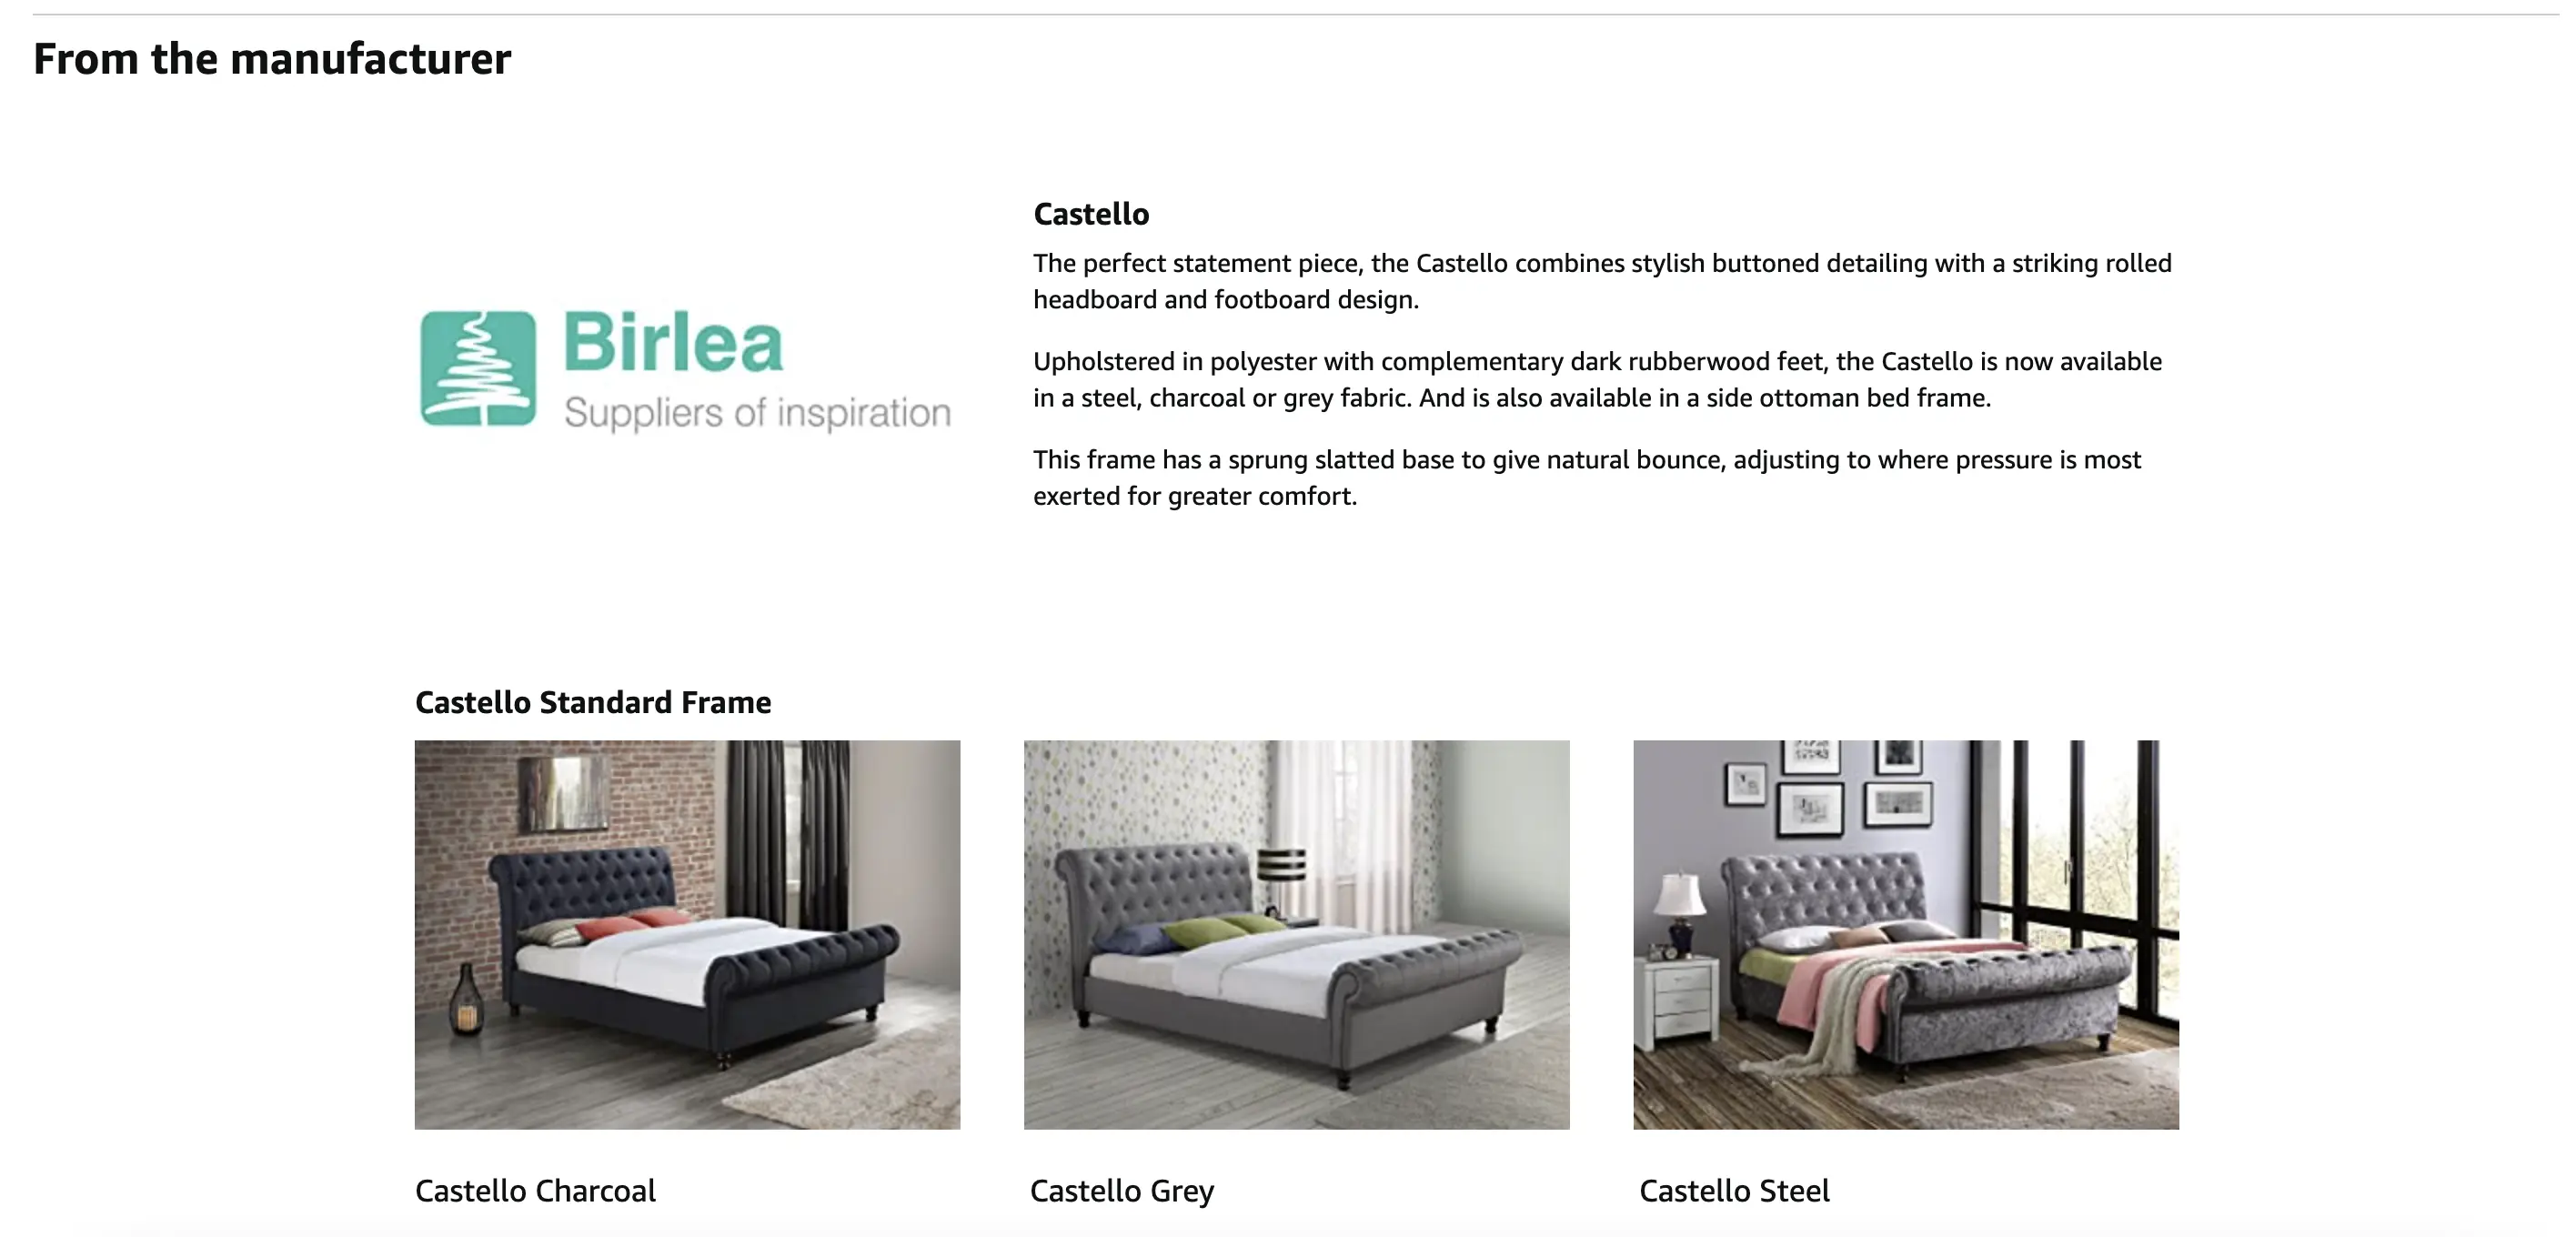 Birlea Furniture Manufacturer information in Amazon - Product Listing